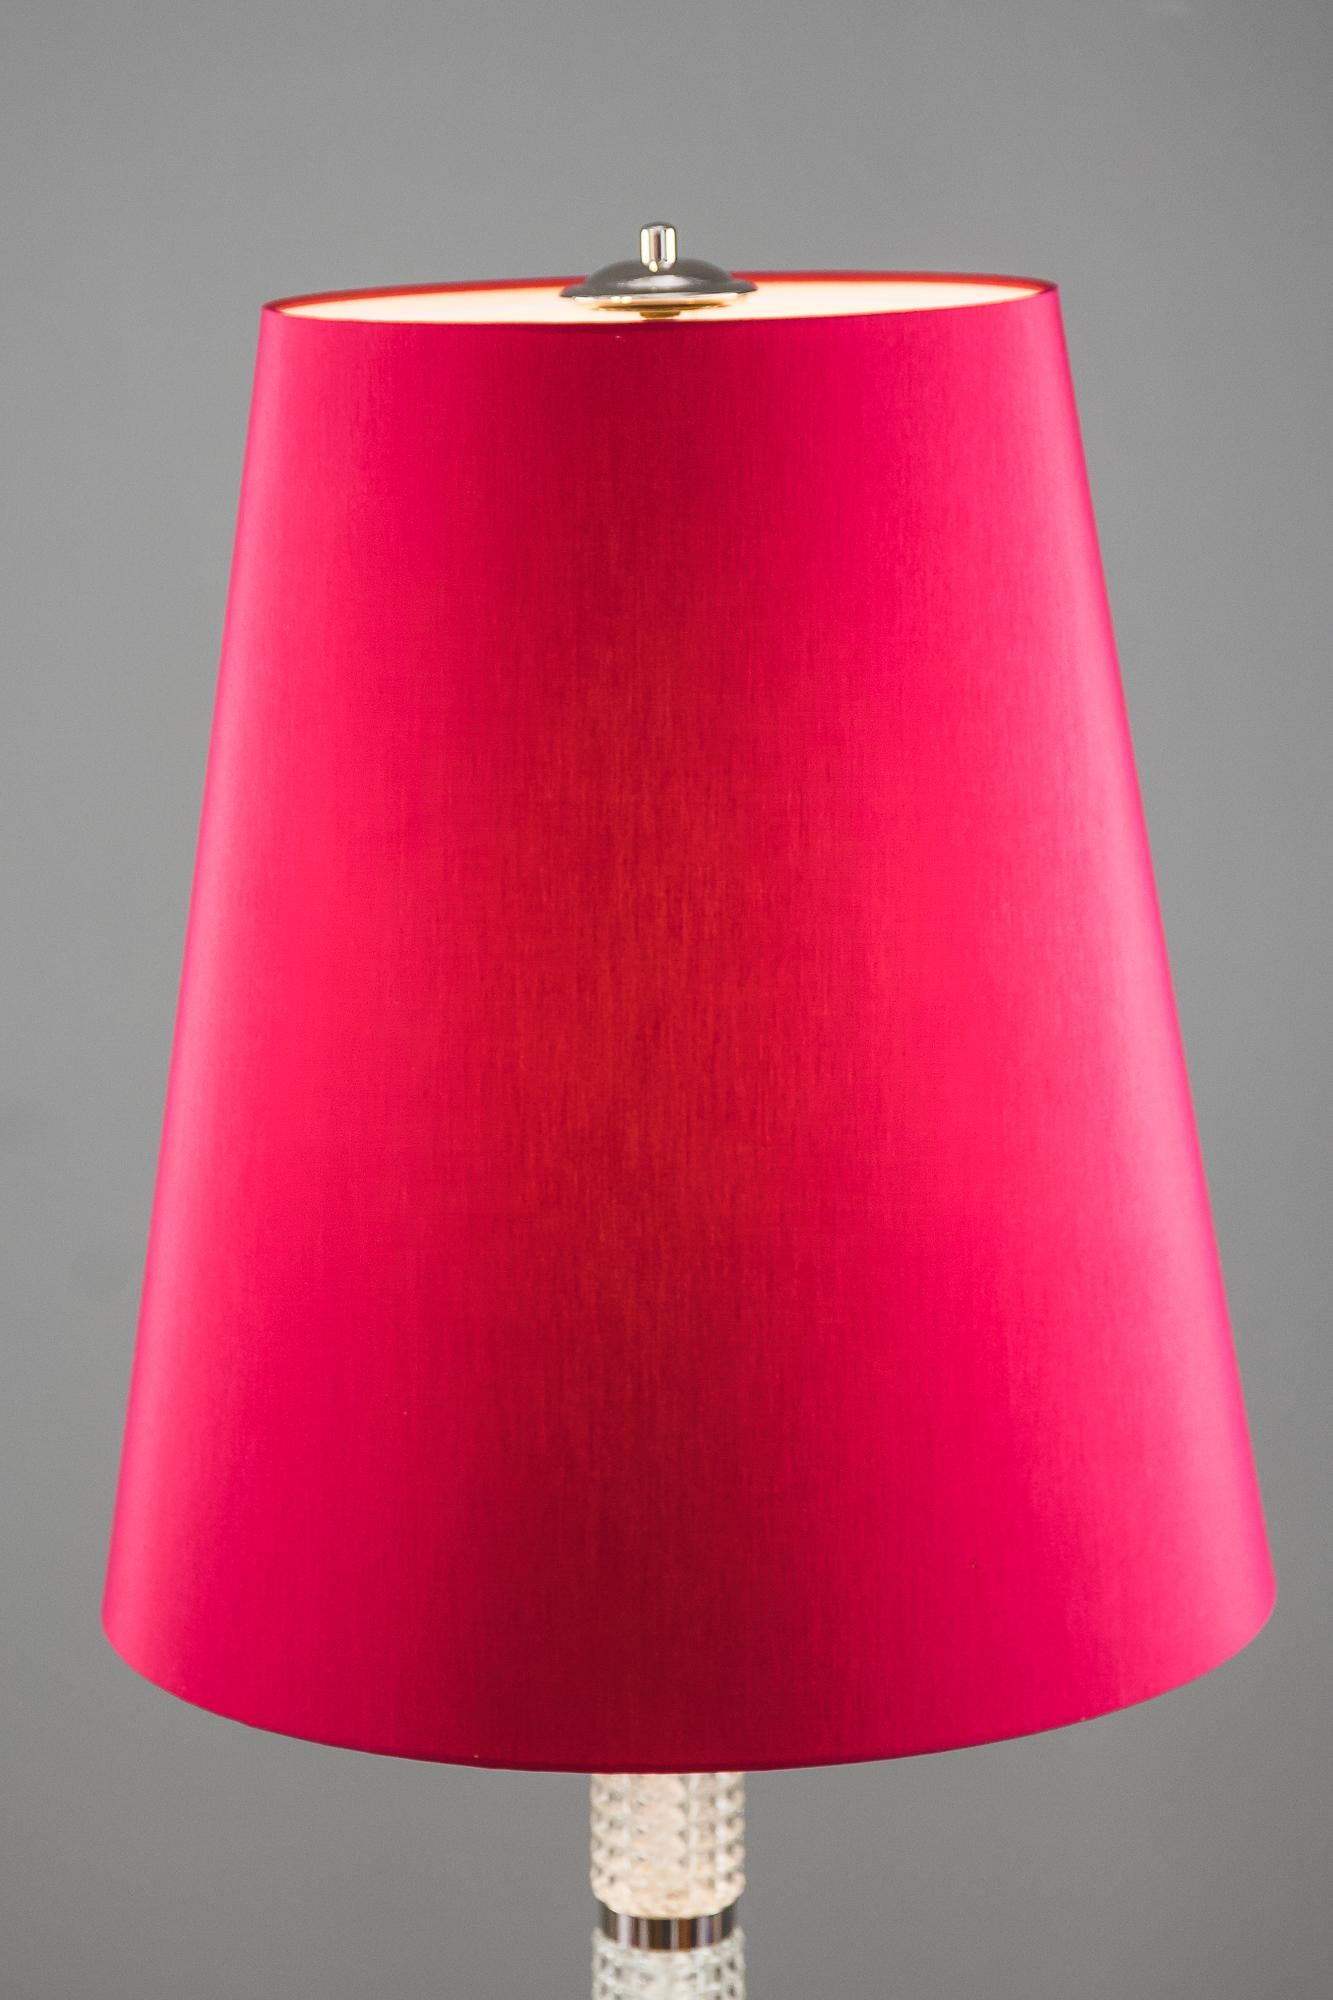 Fabric Richard Essig Floor Lamp with Illuminated Glass Stand, 1970s